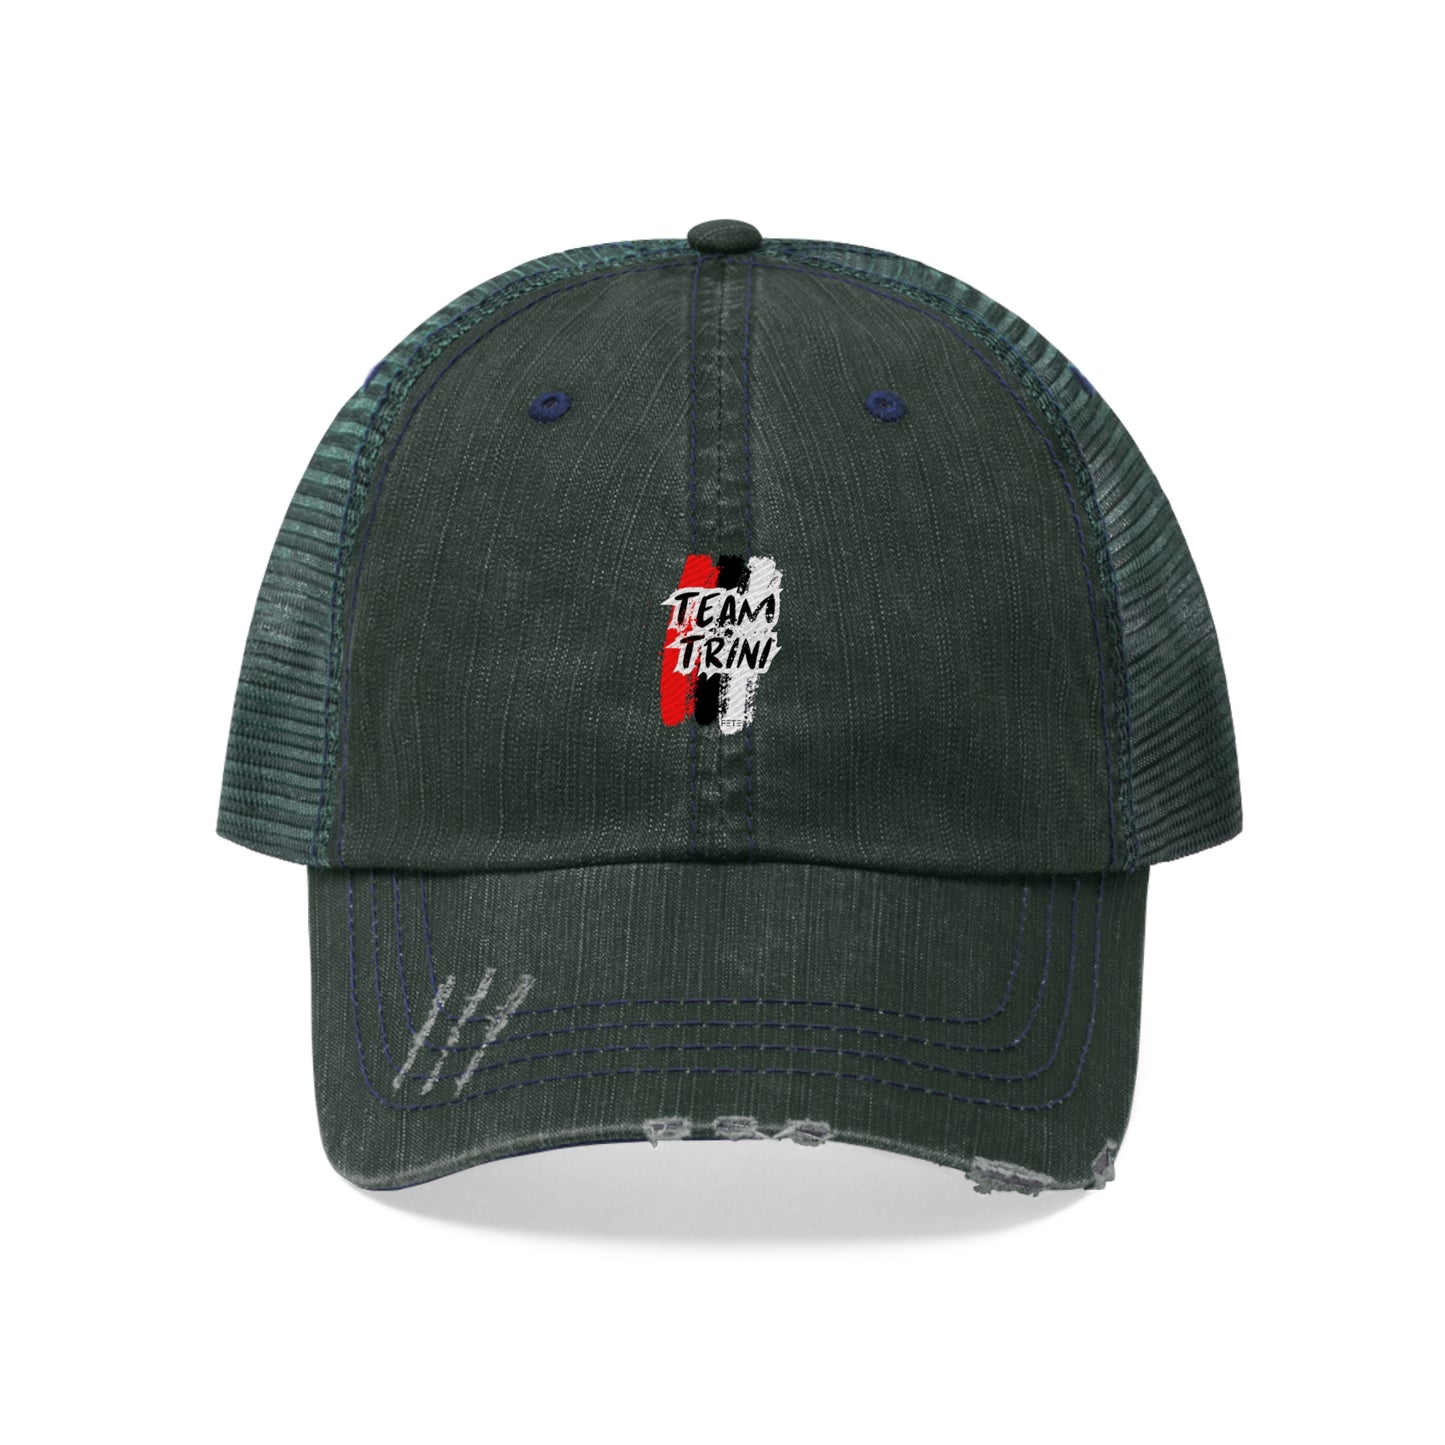 Team Trini Trucker Hat